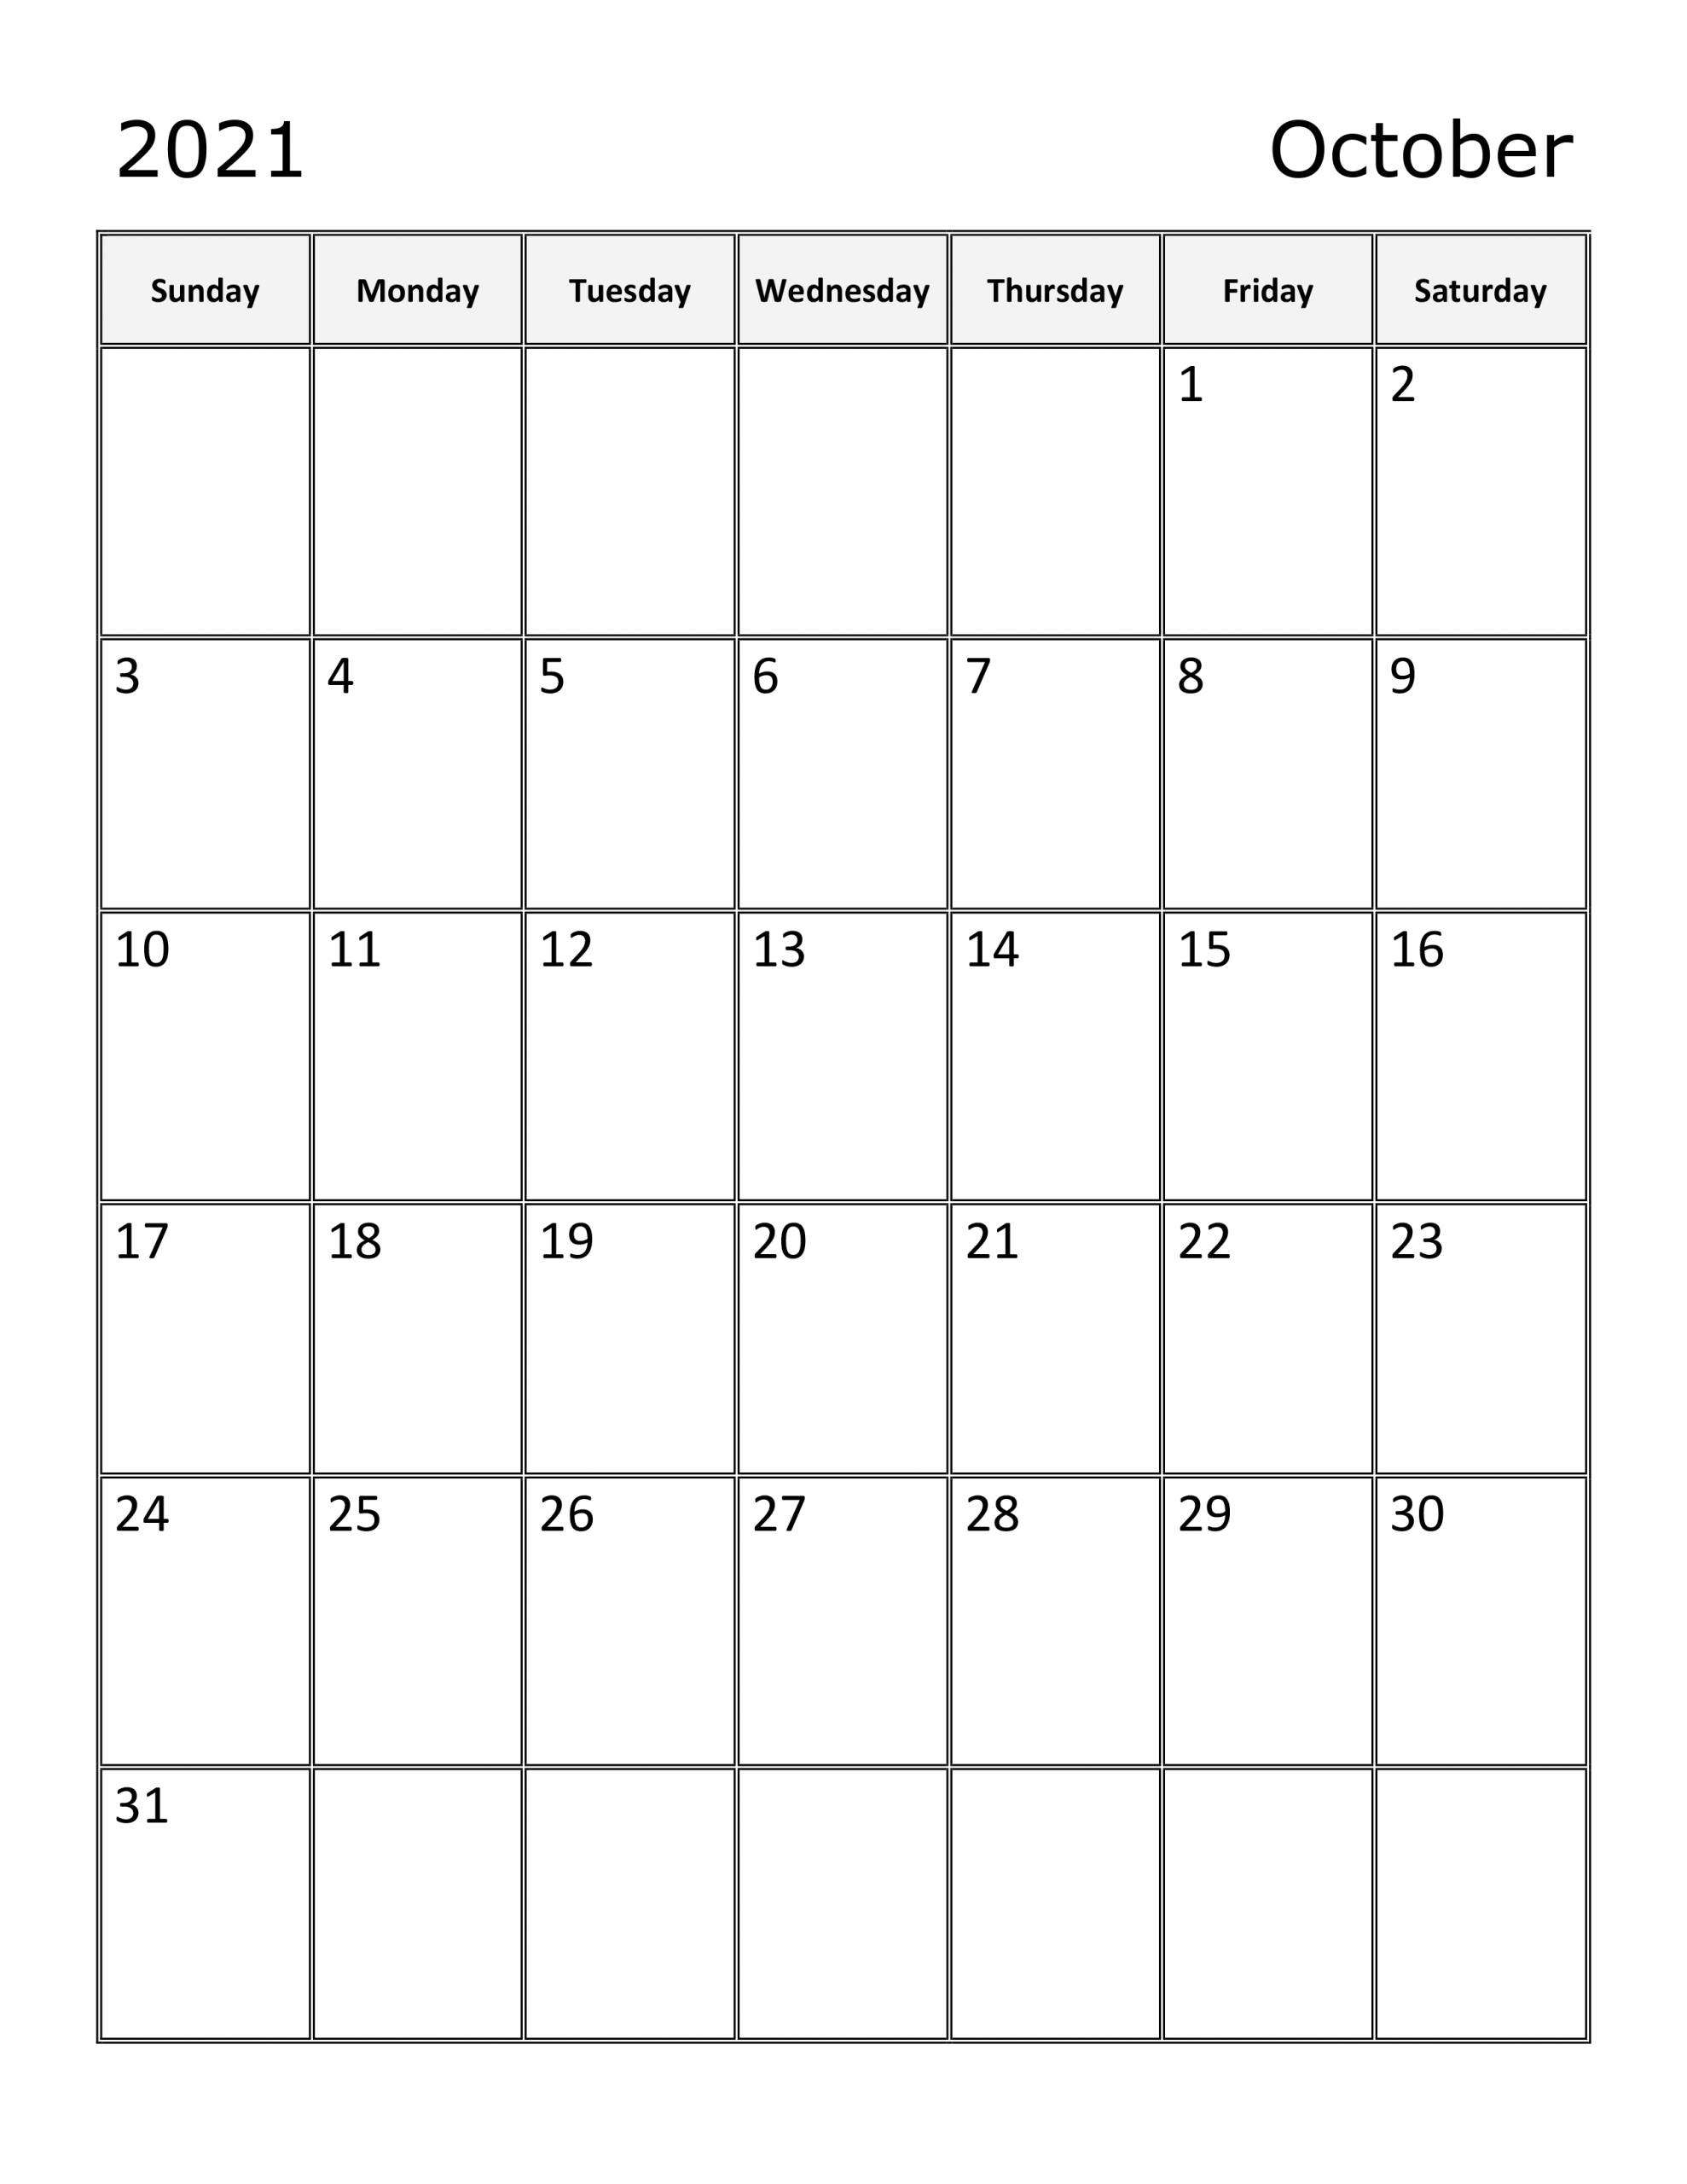 Calendar For October 2021 - Free-Calendarsu